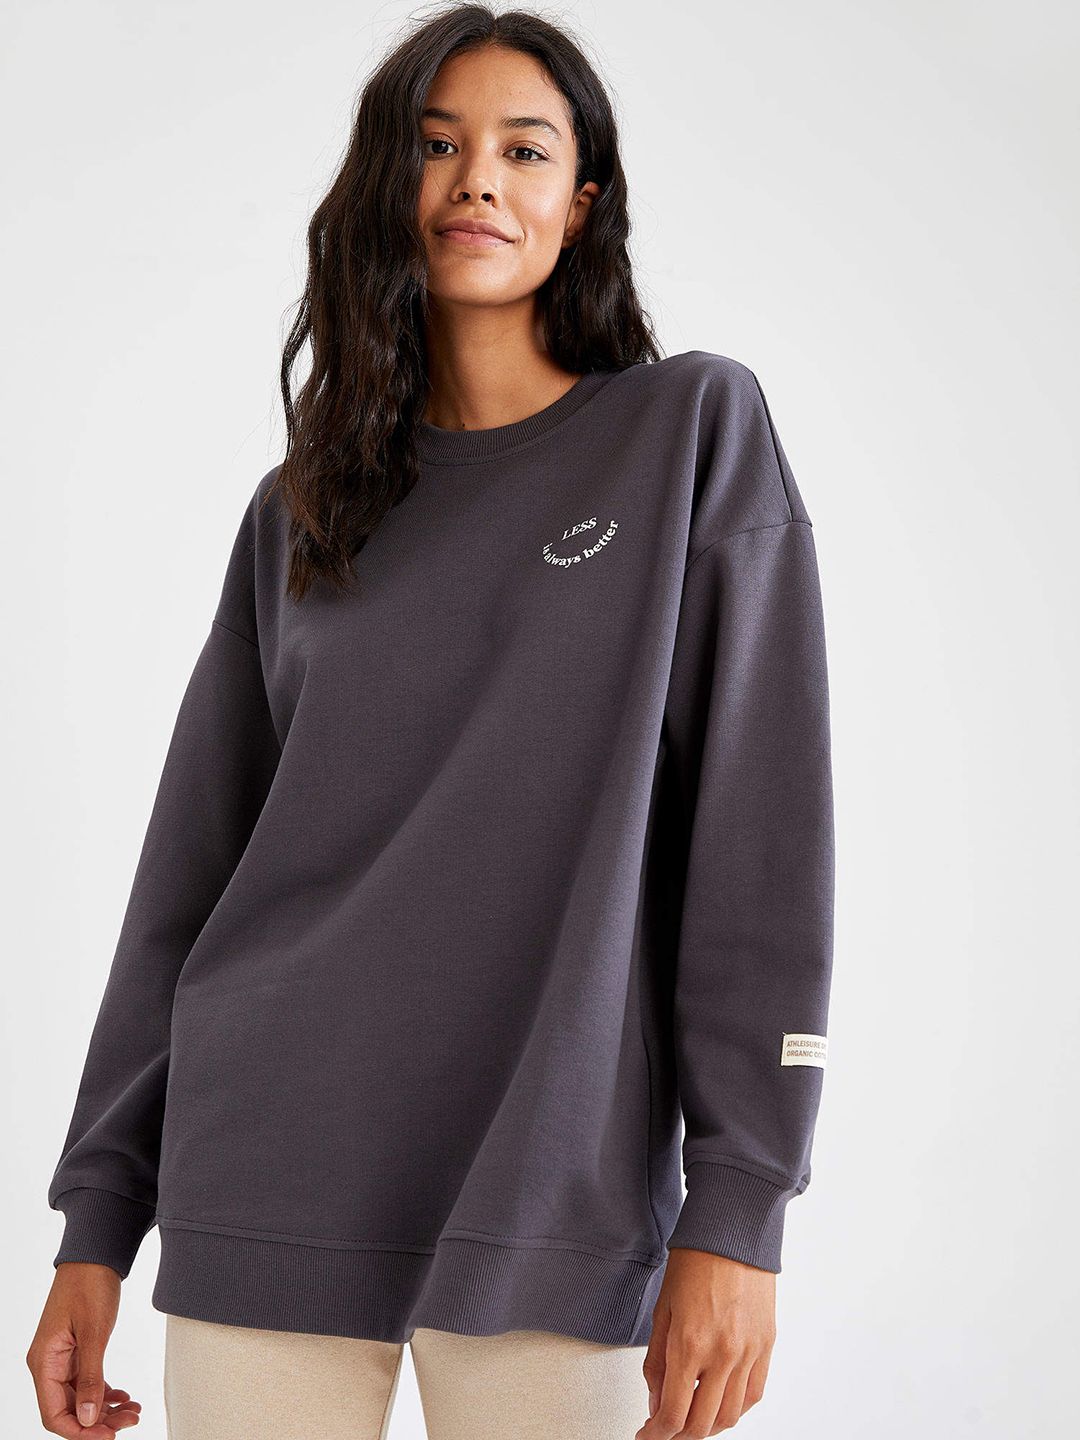 DeFacto Women Charcoal Grey Cotton Solid Sweatshirt Price in India